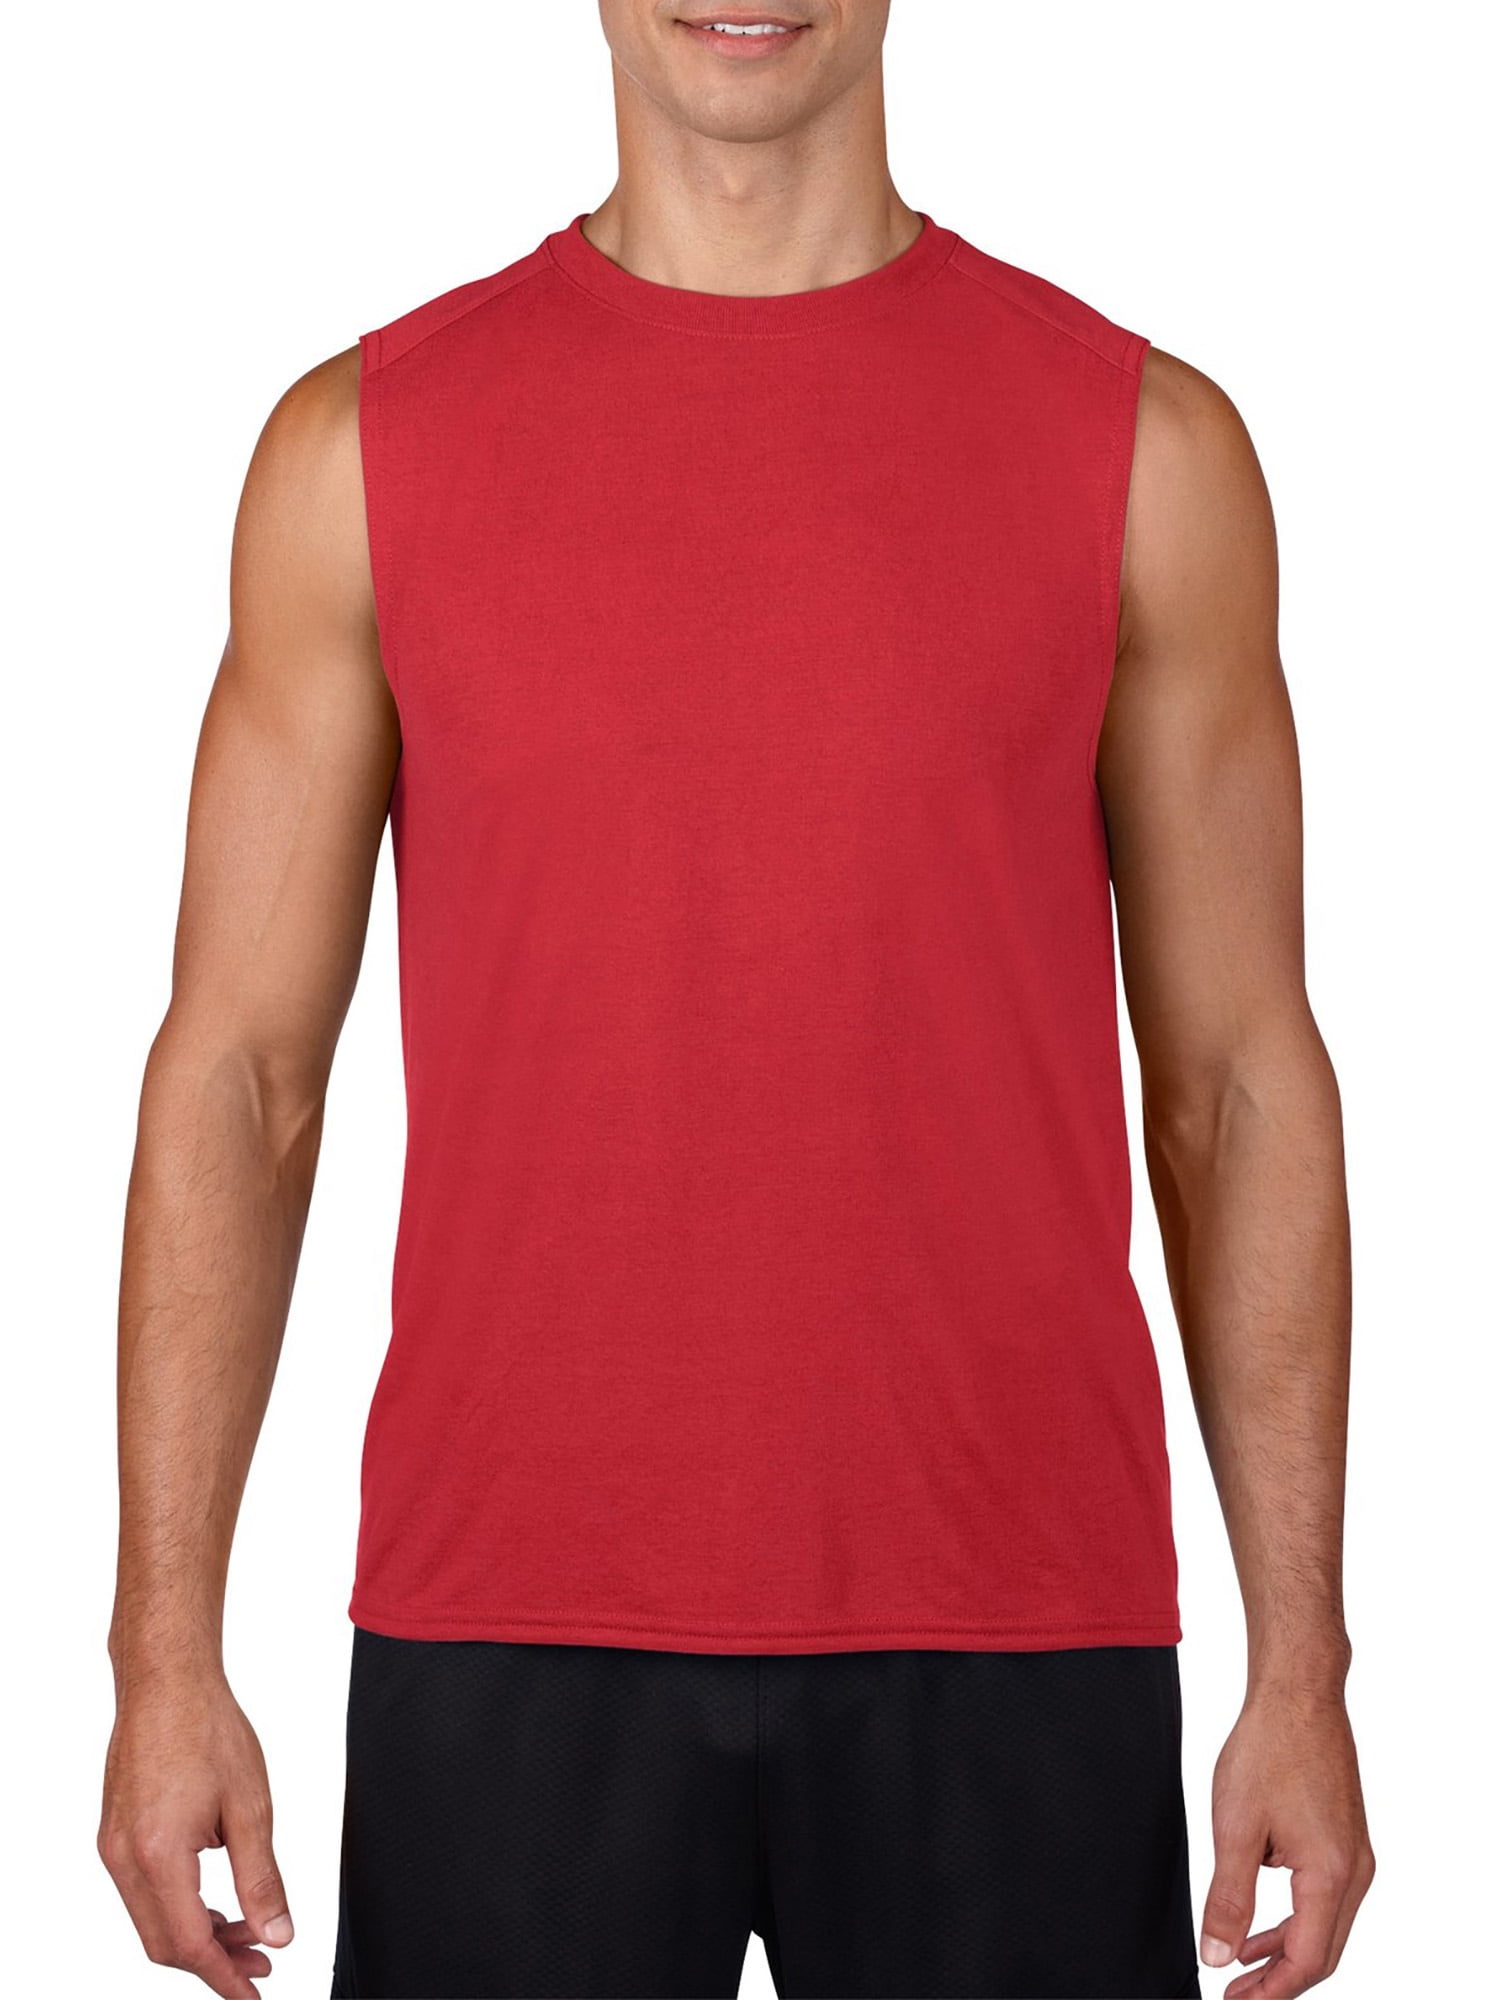 Big Mens AquaFX Performance Sleeveless T-Shirt, 2XL - Walmart.com